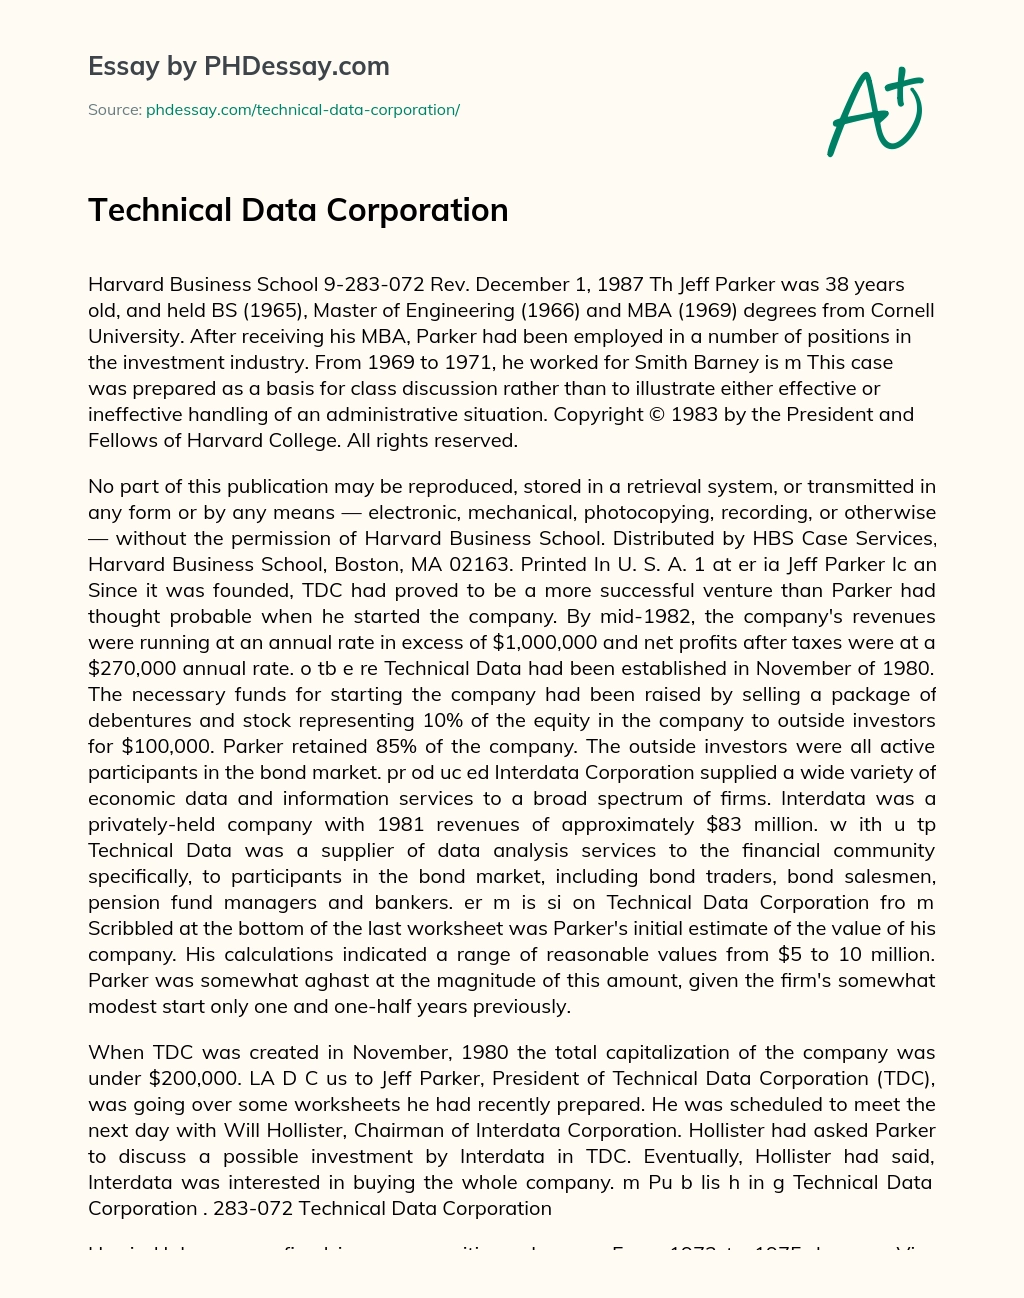 Technical Data Corporation essay